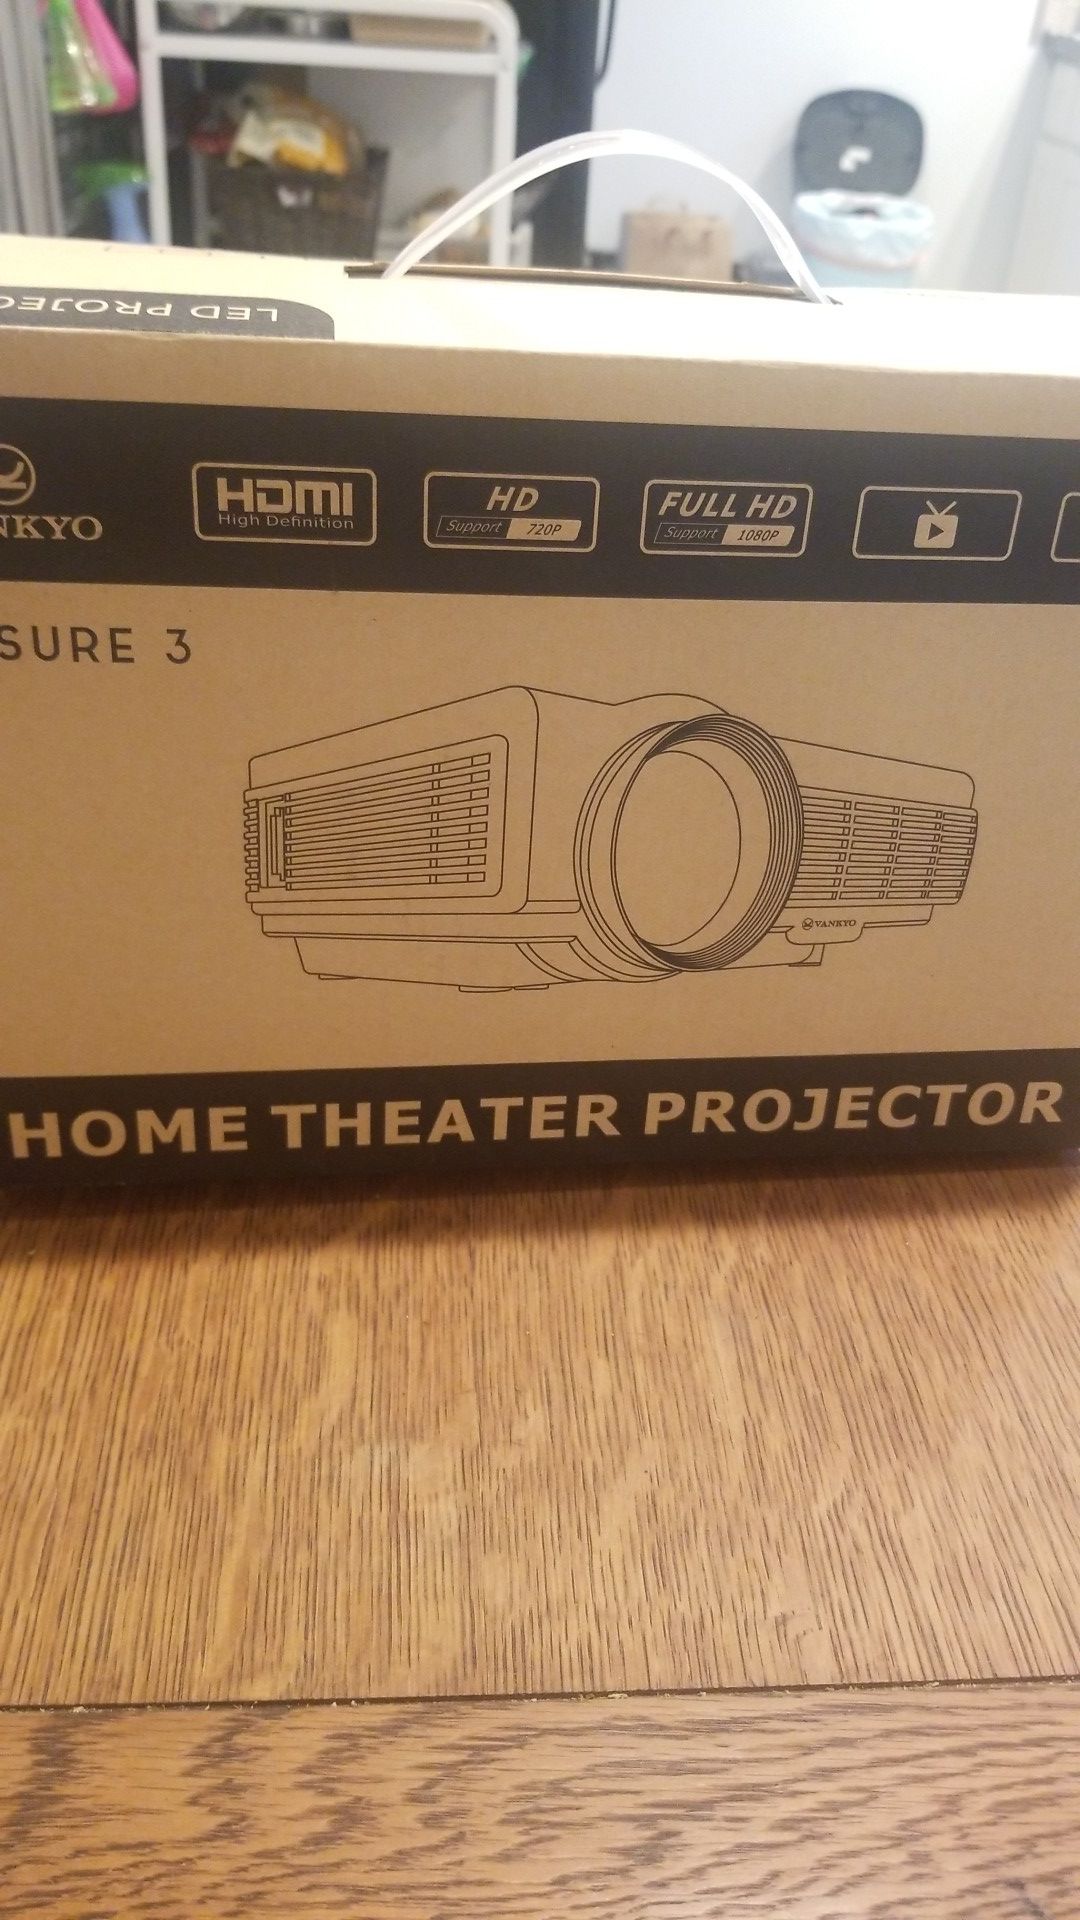 Vanjyo home theater projector BRAND NEW